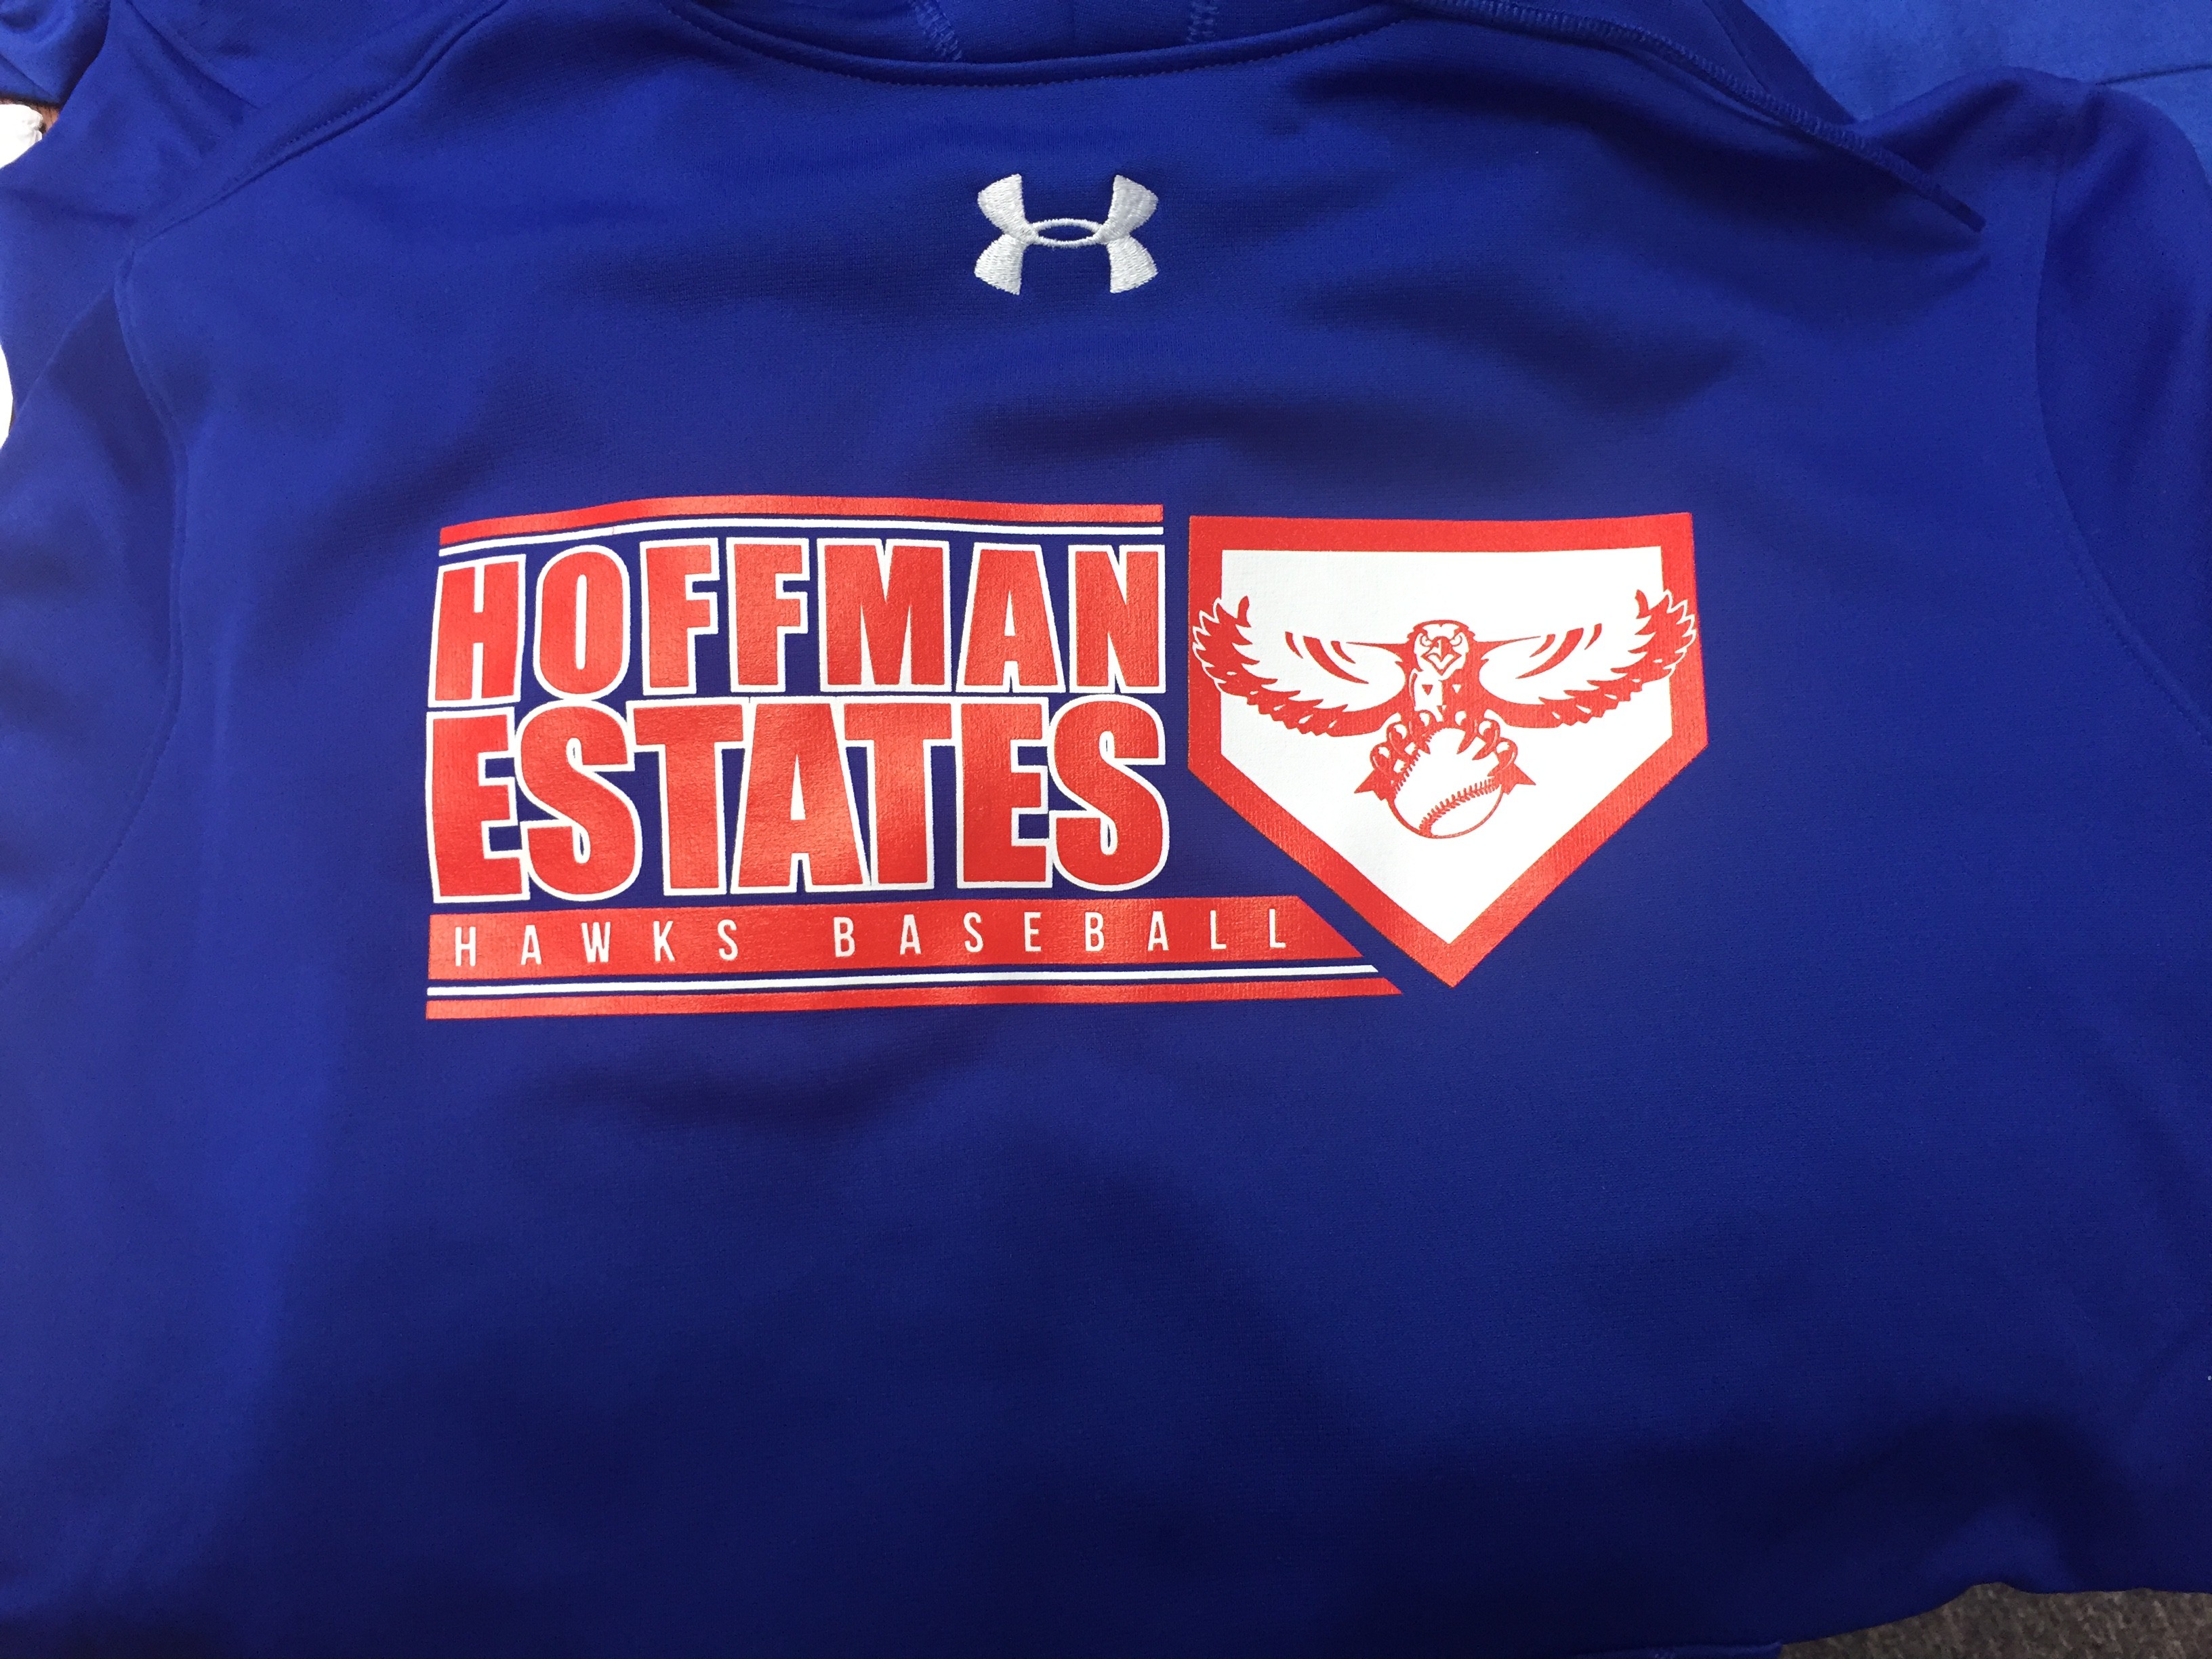 Hoffman Estates HS